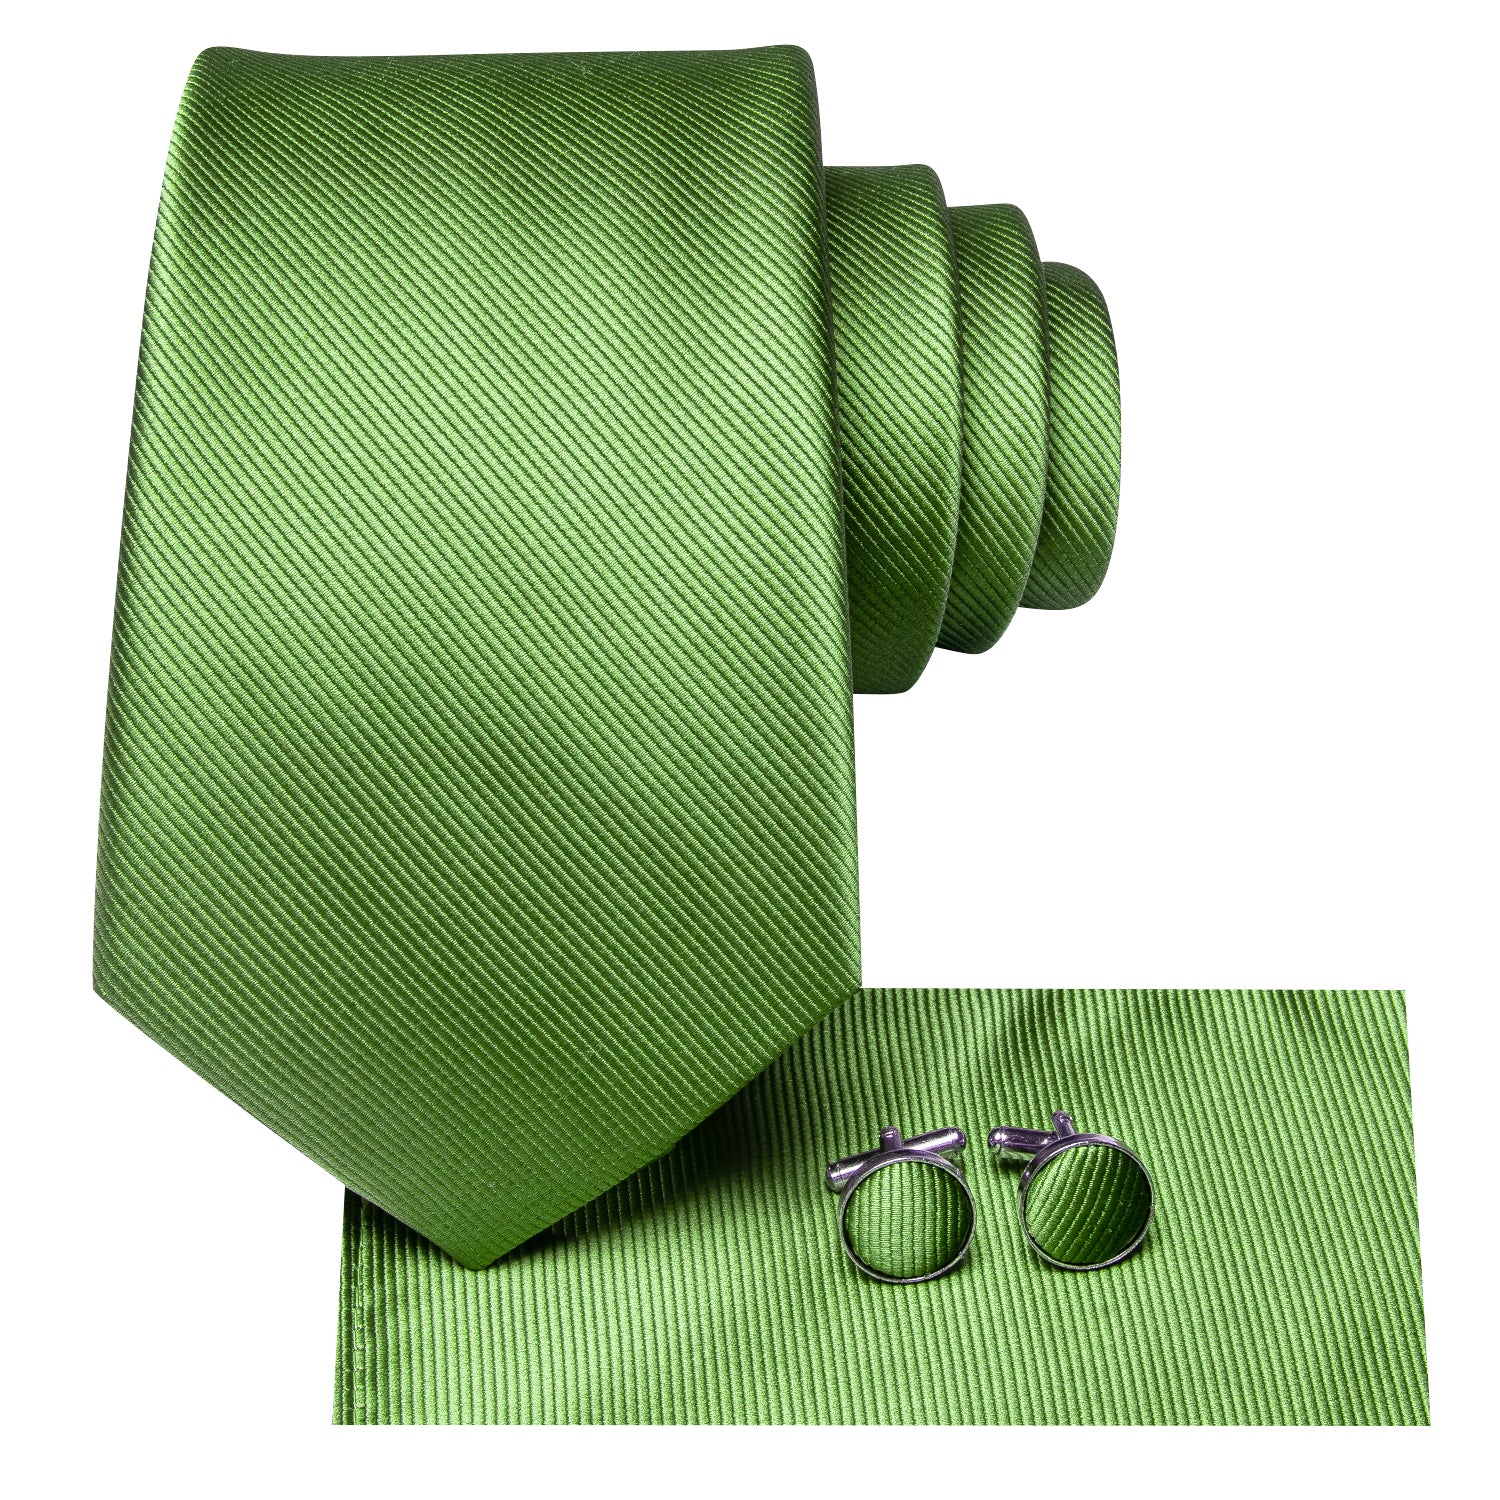 Grass Green Solid Tie Pocket Square Cufflinks Set